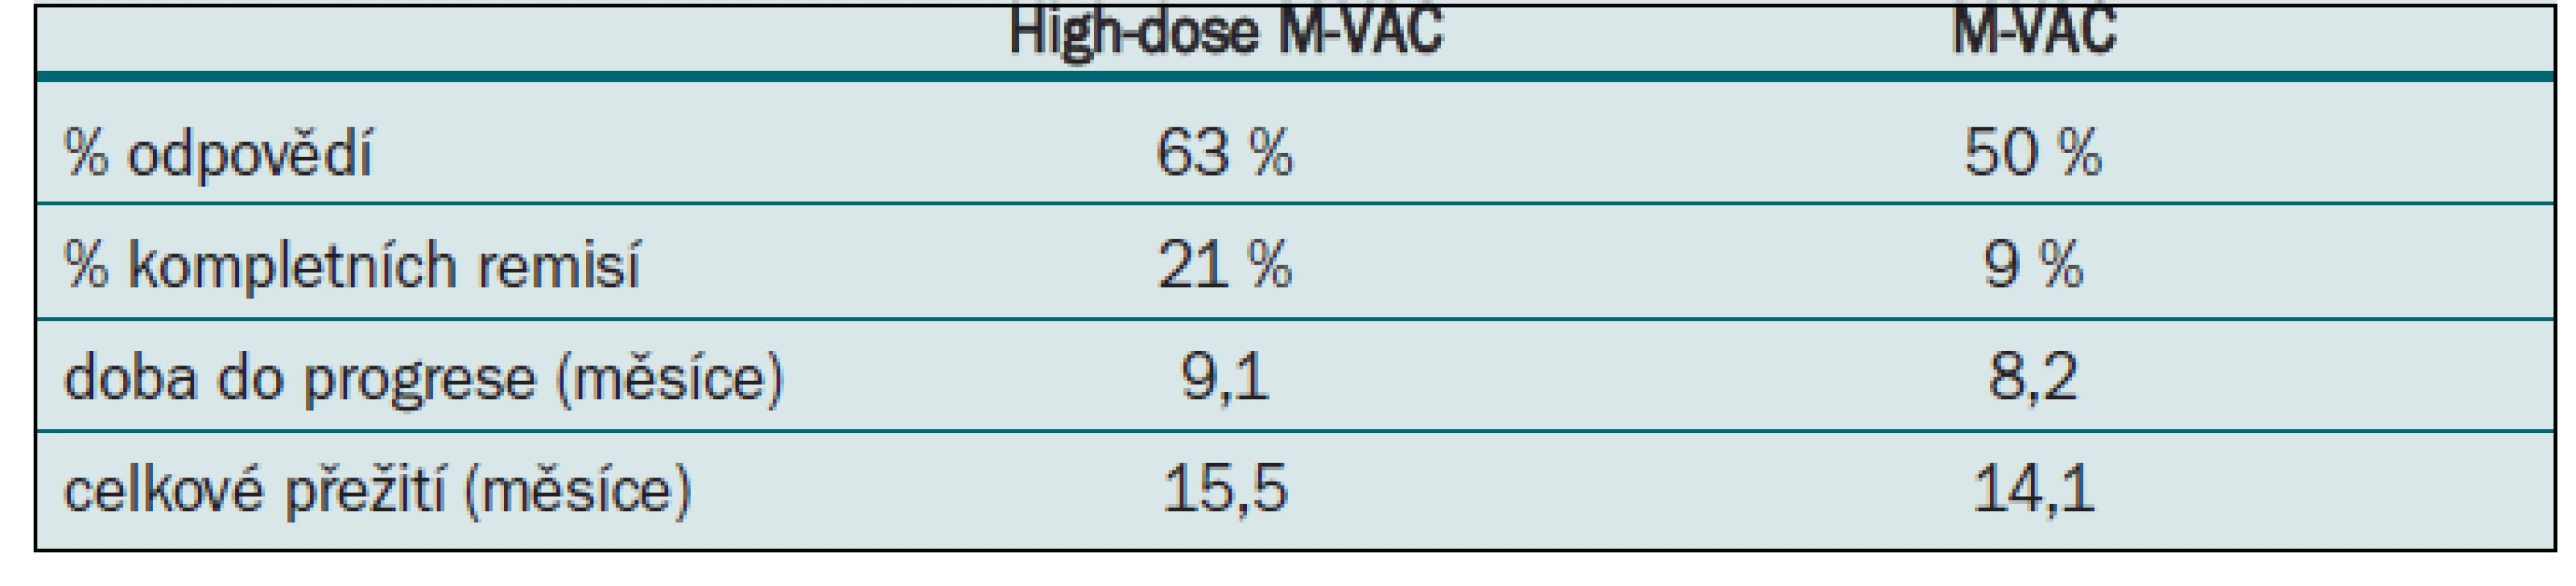 High-dose M-VAC vs M-VAC.